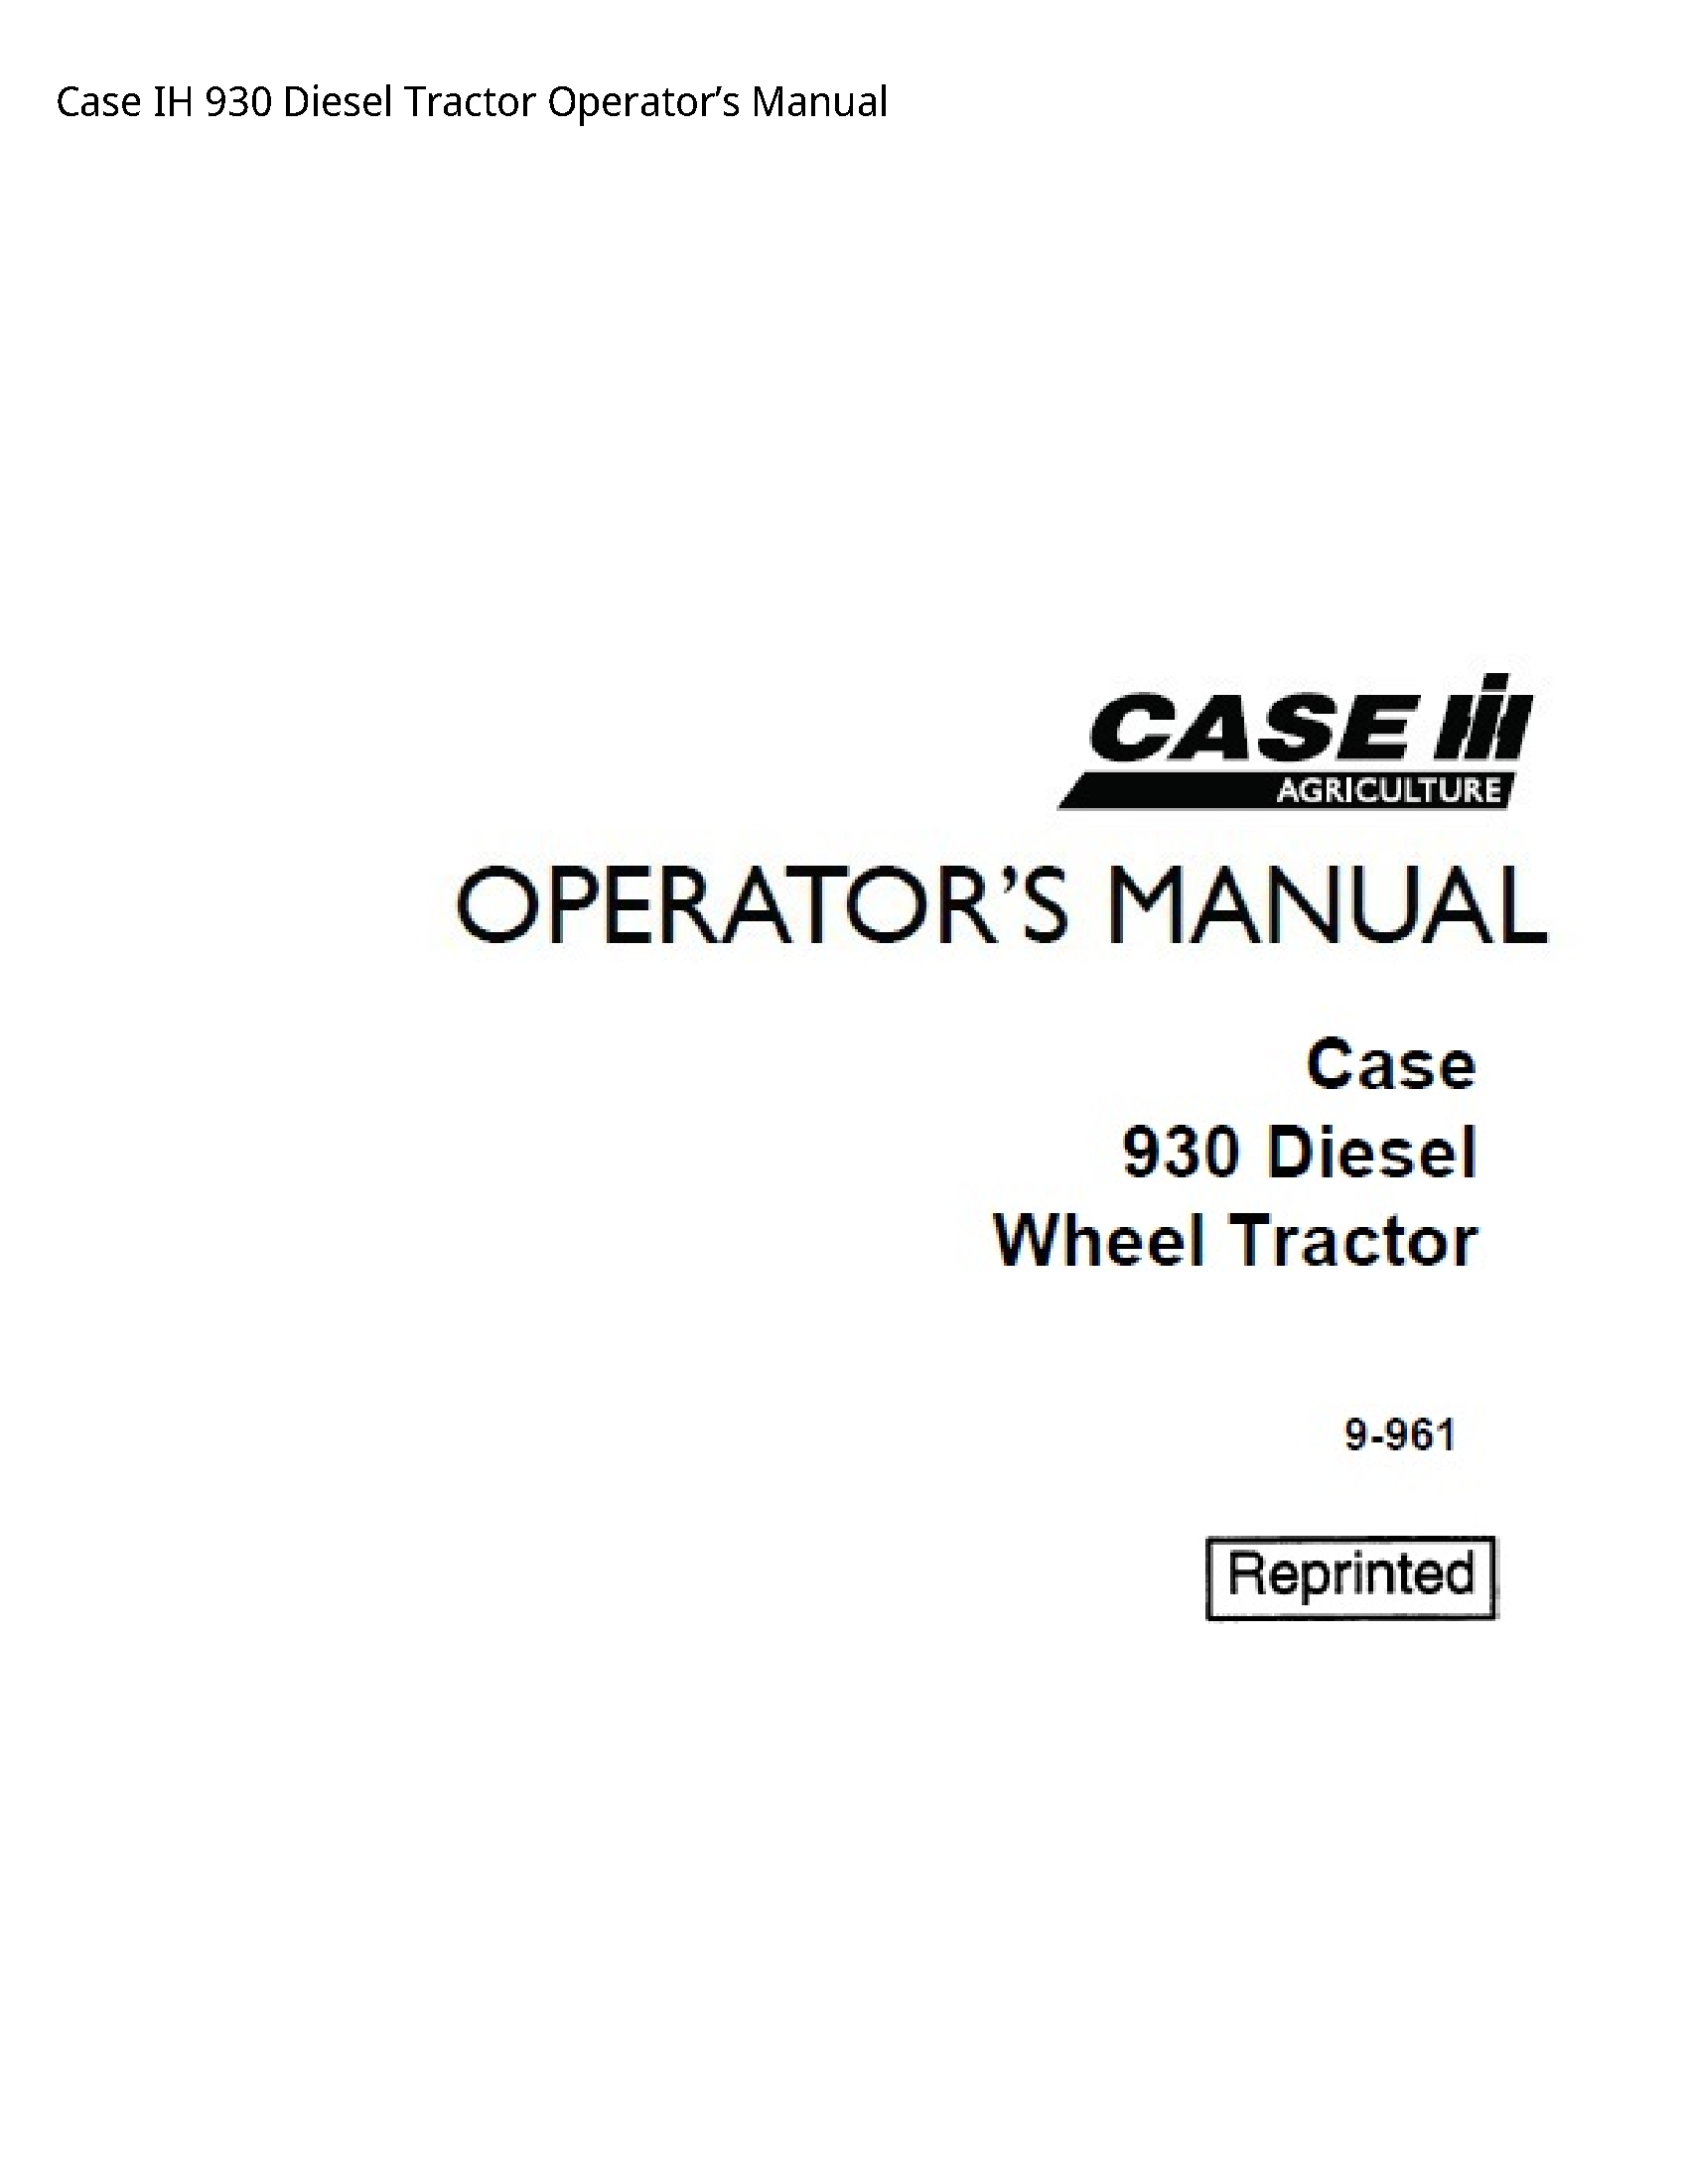 Case/Case IH 930 IH Diesel Tractor Operator’s manual